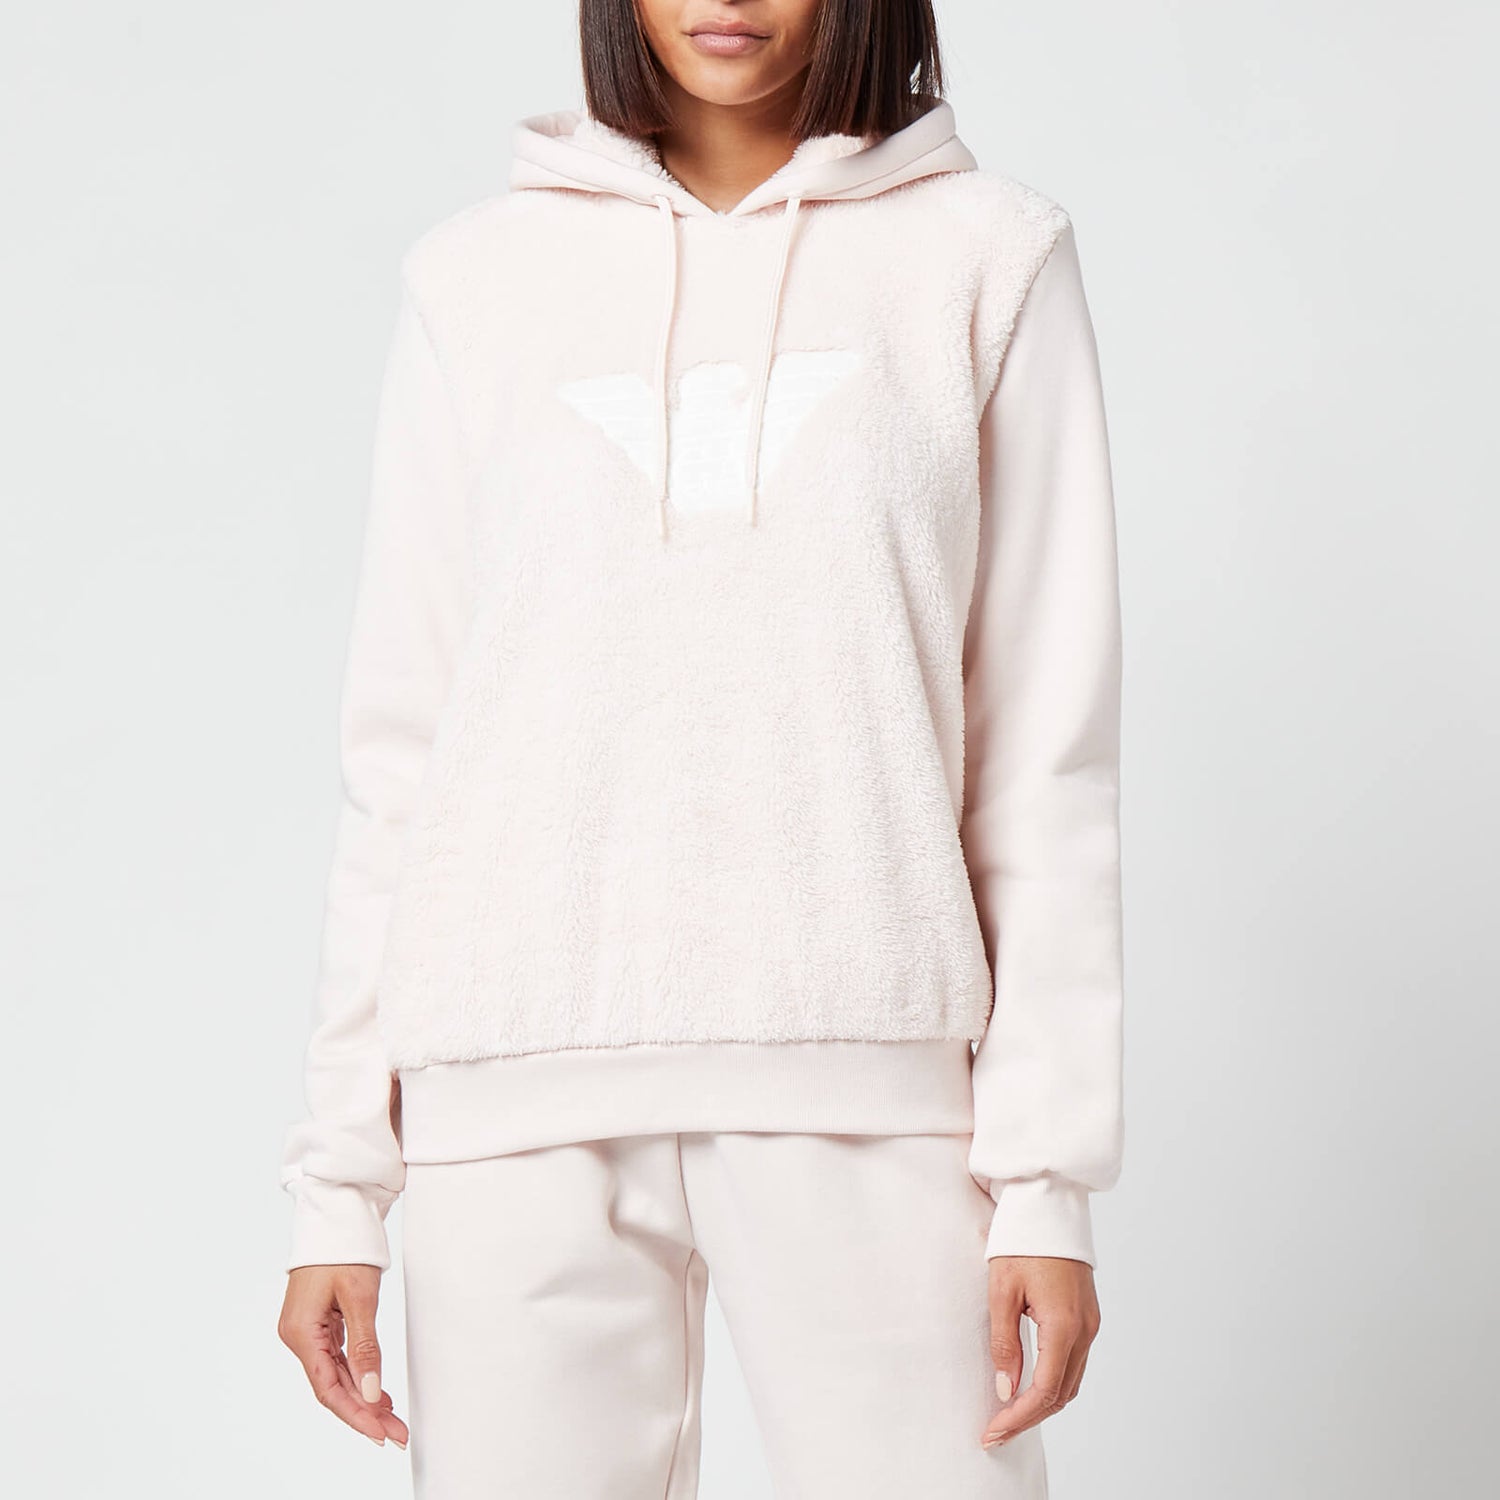 Emporio Armani Loungewear Women's Fuzzy Fleece Sweater - Powder Pink